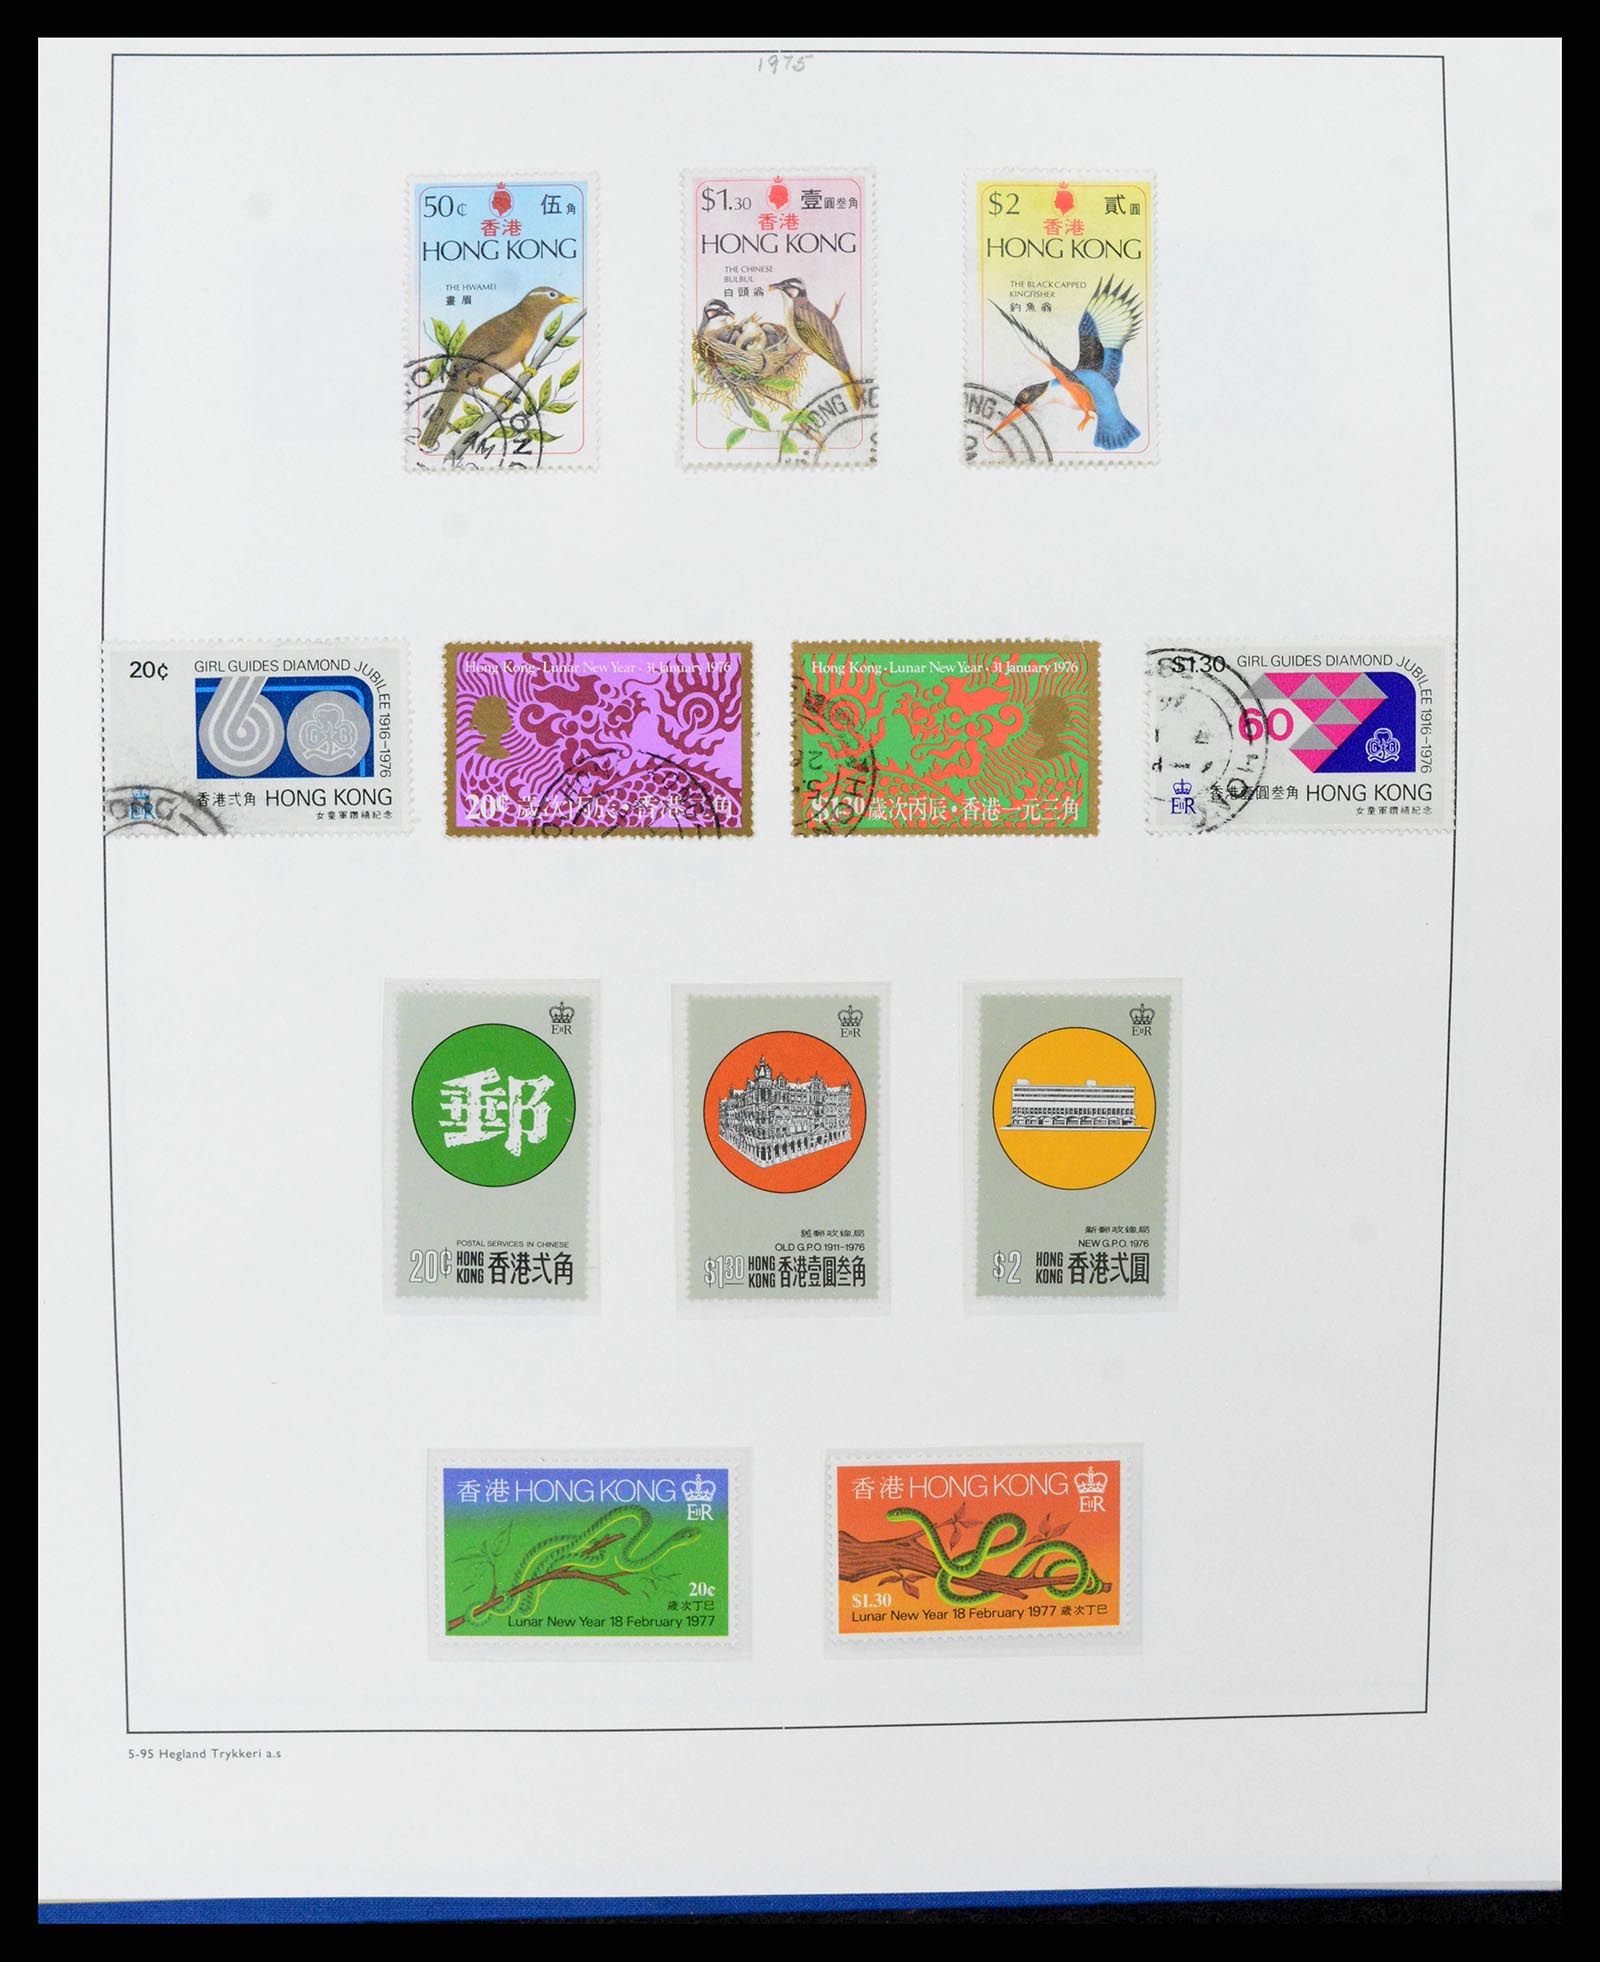 37955 0072 - Stamp collection 37955 Hong Kong supercollection 1862-2007.